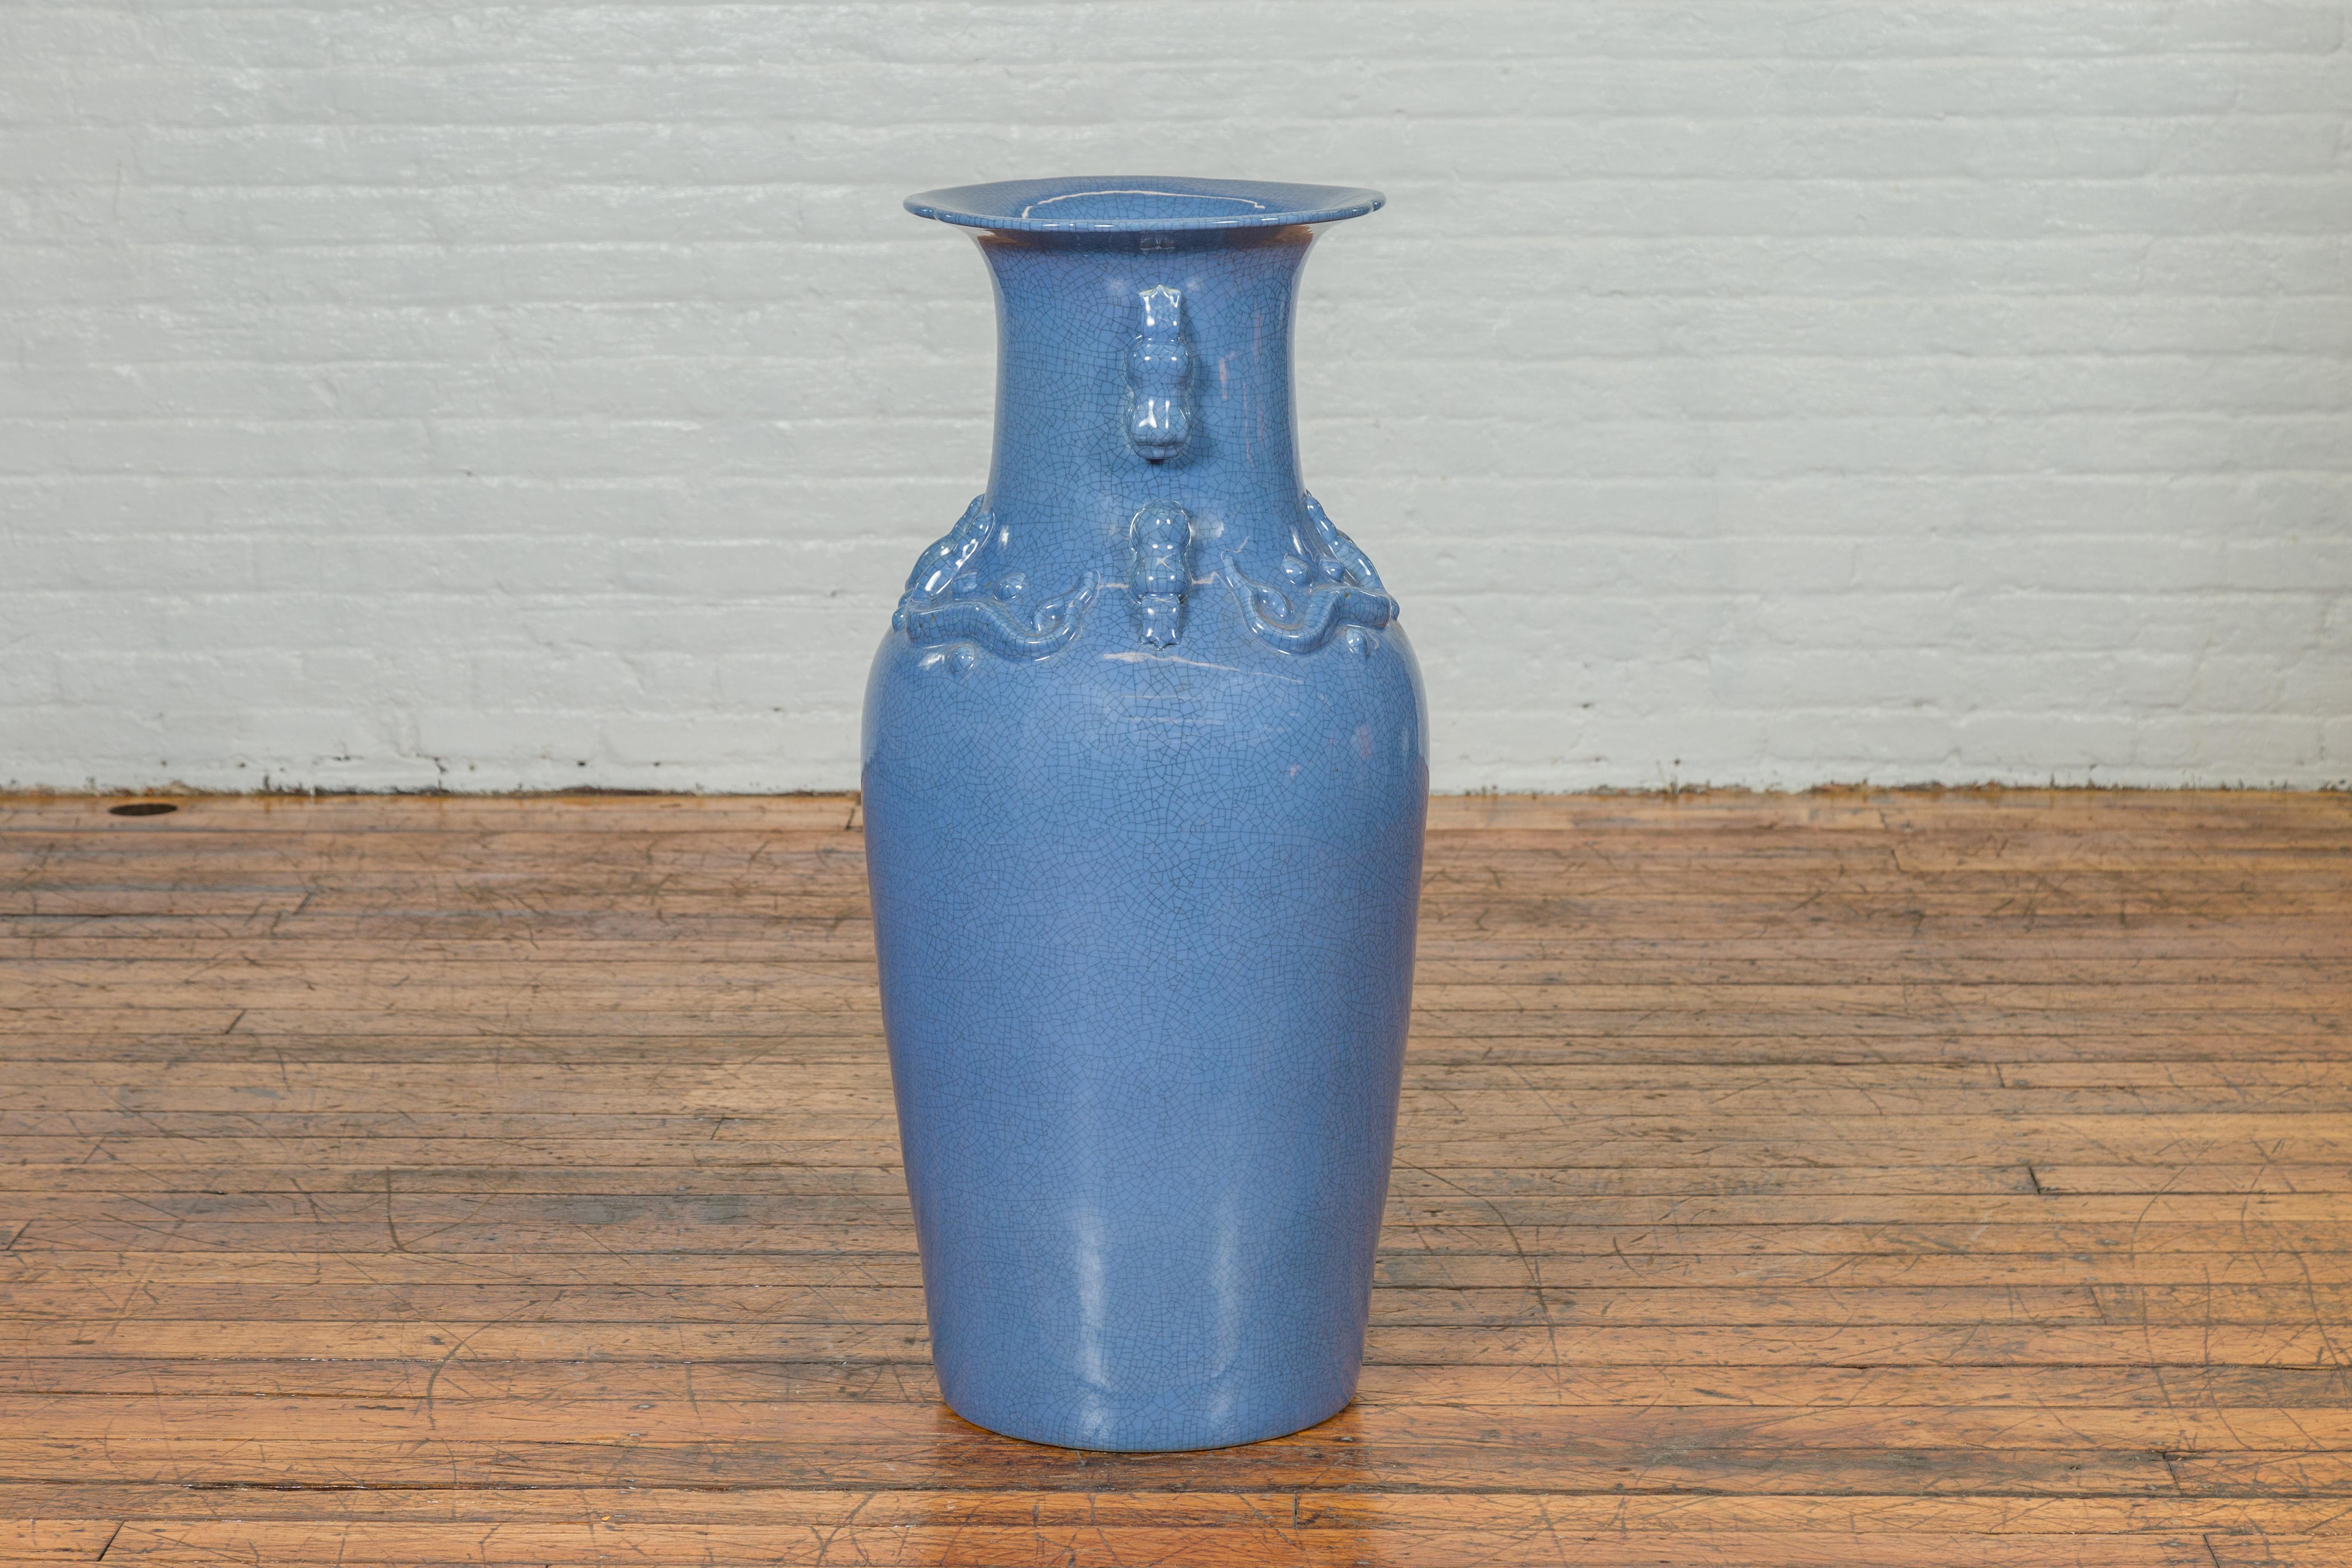 Ceremonial Altar Vase with Crackled Blue Glaze and Decorative Motifs For Sale 2